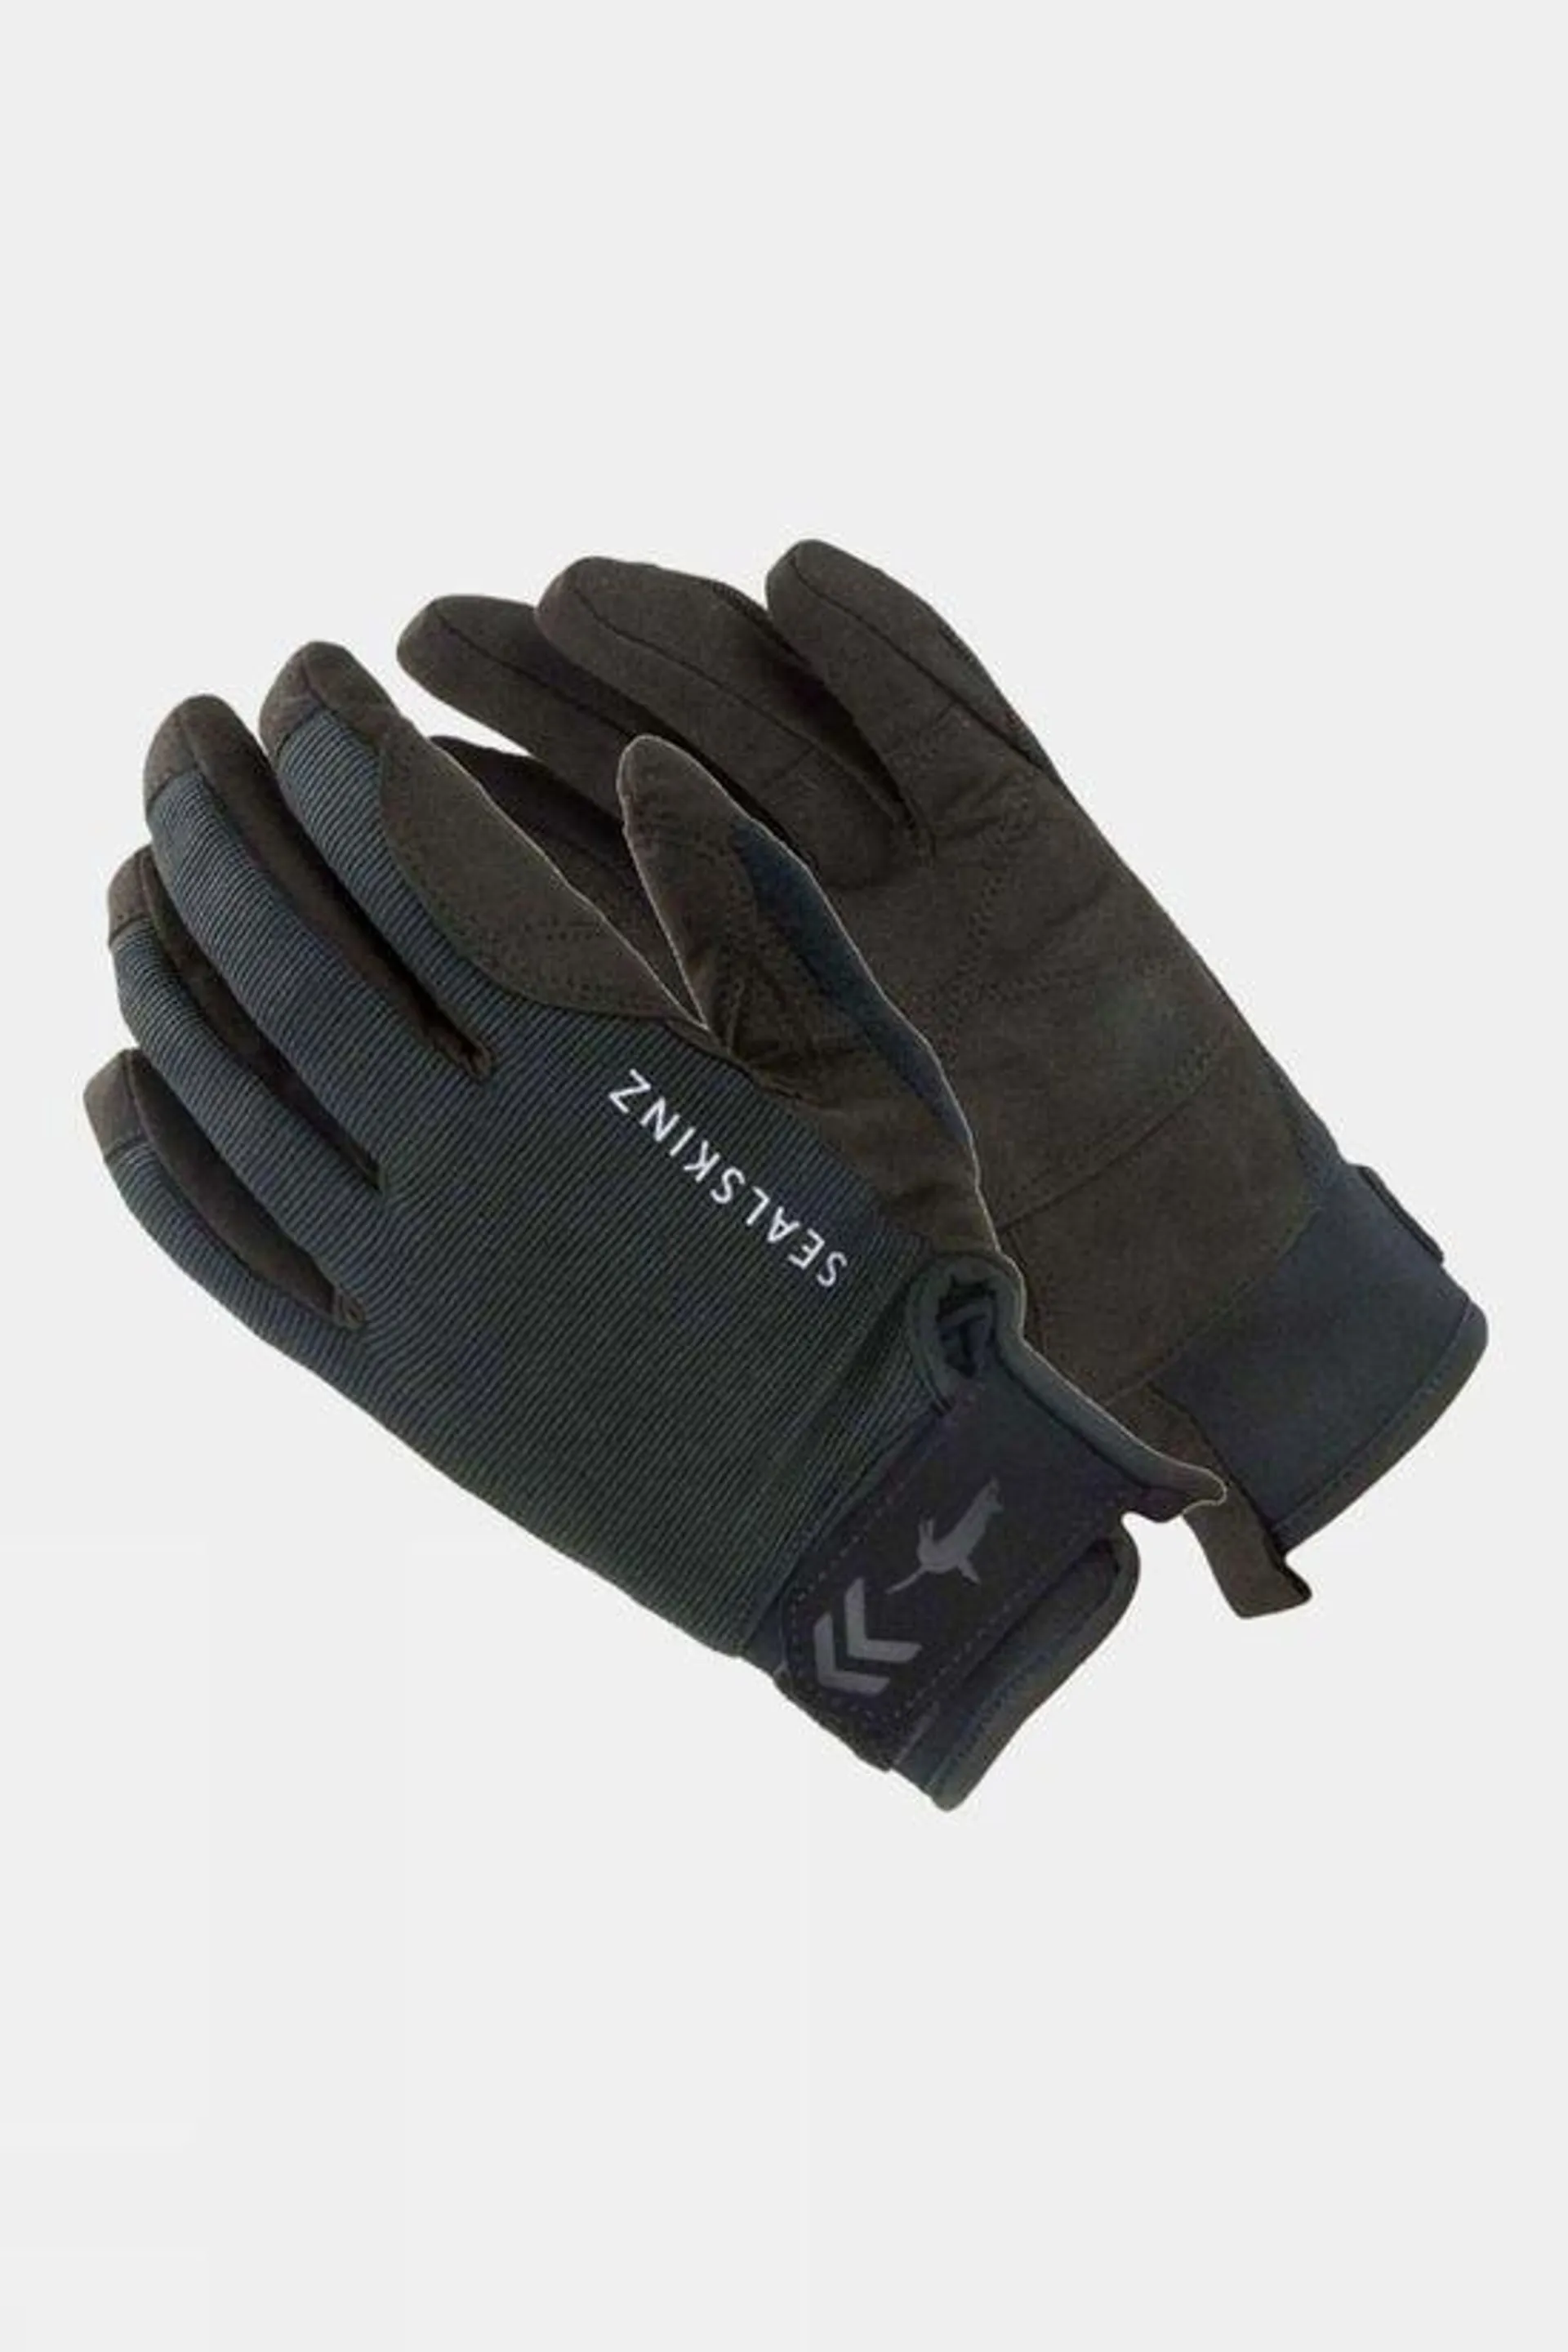 SealSkinz Mens Waterproof All Weather Gloves